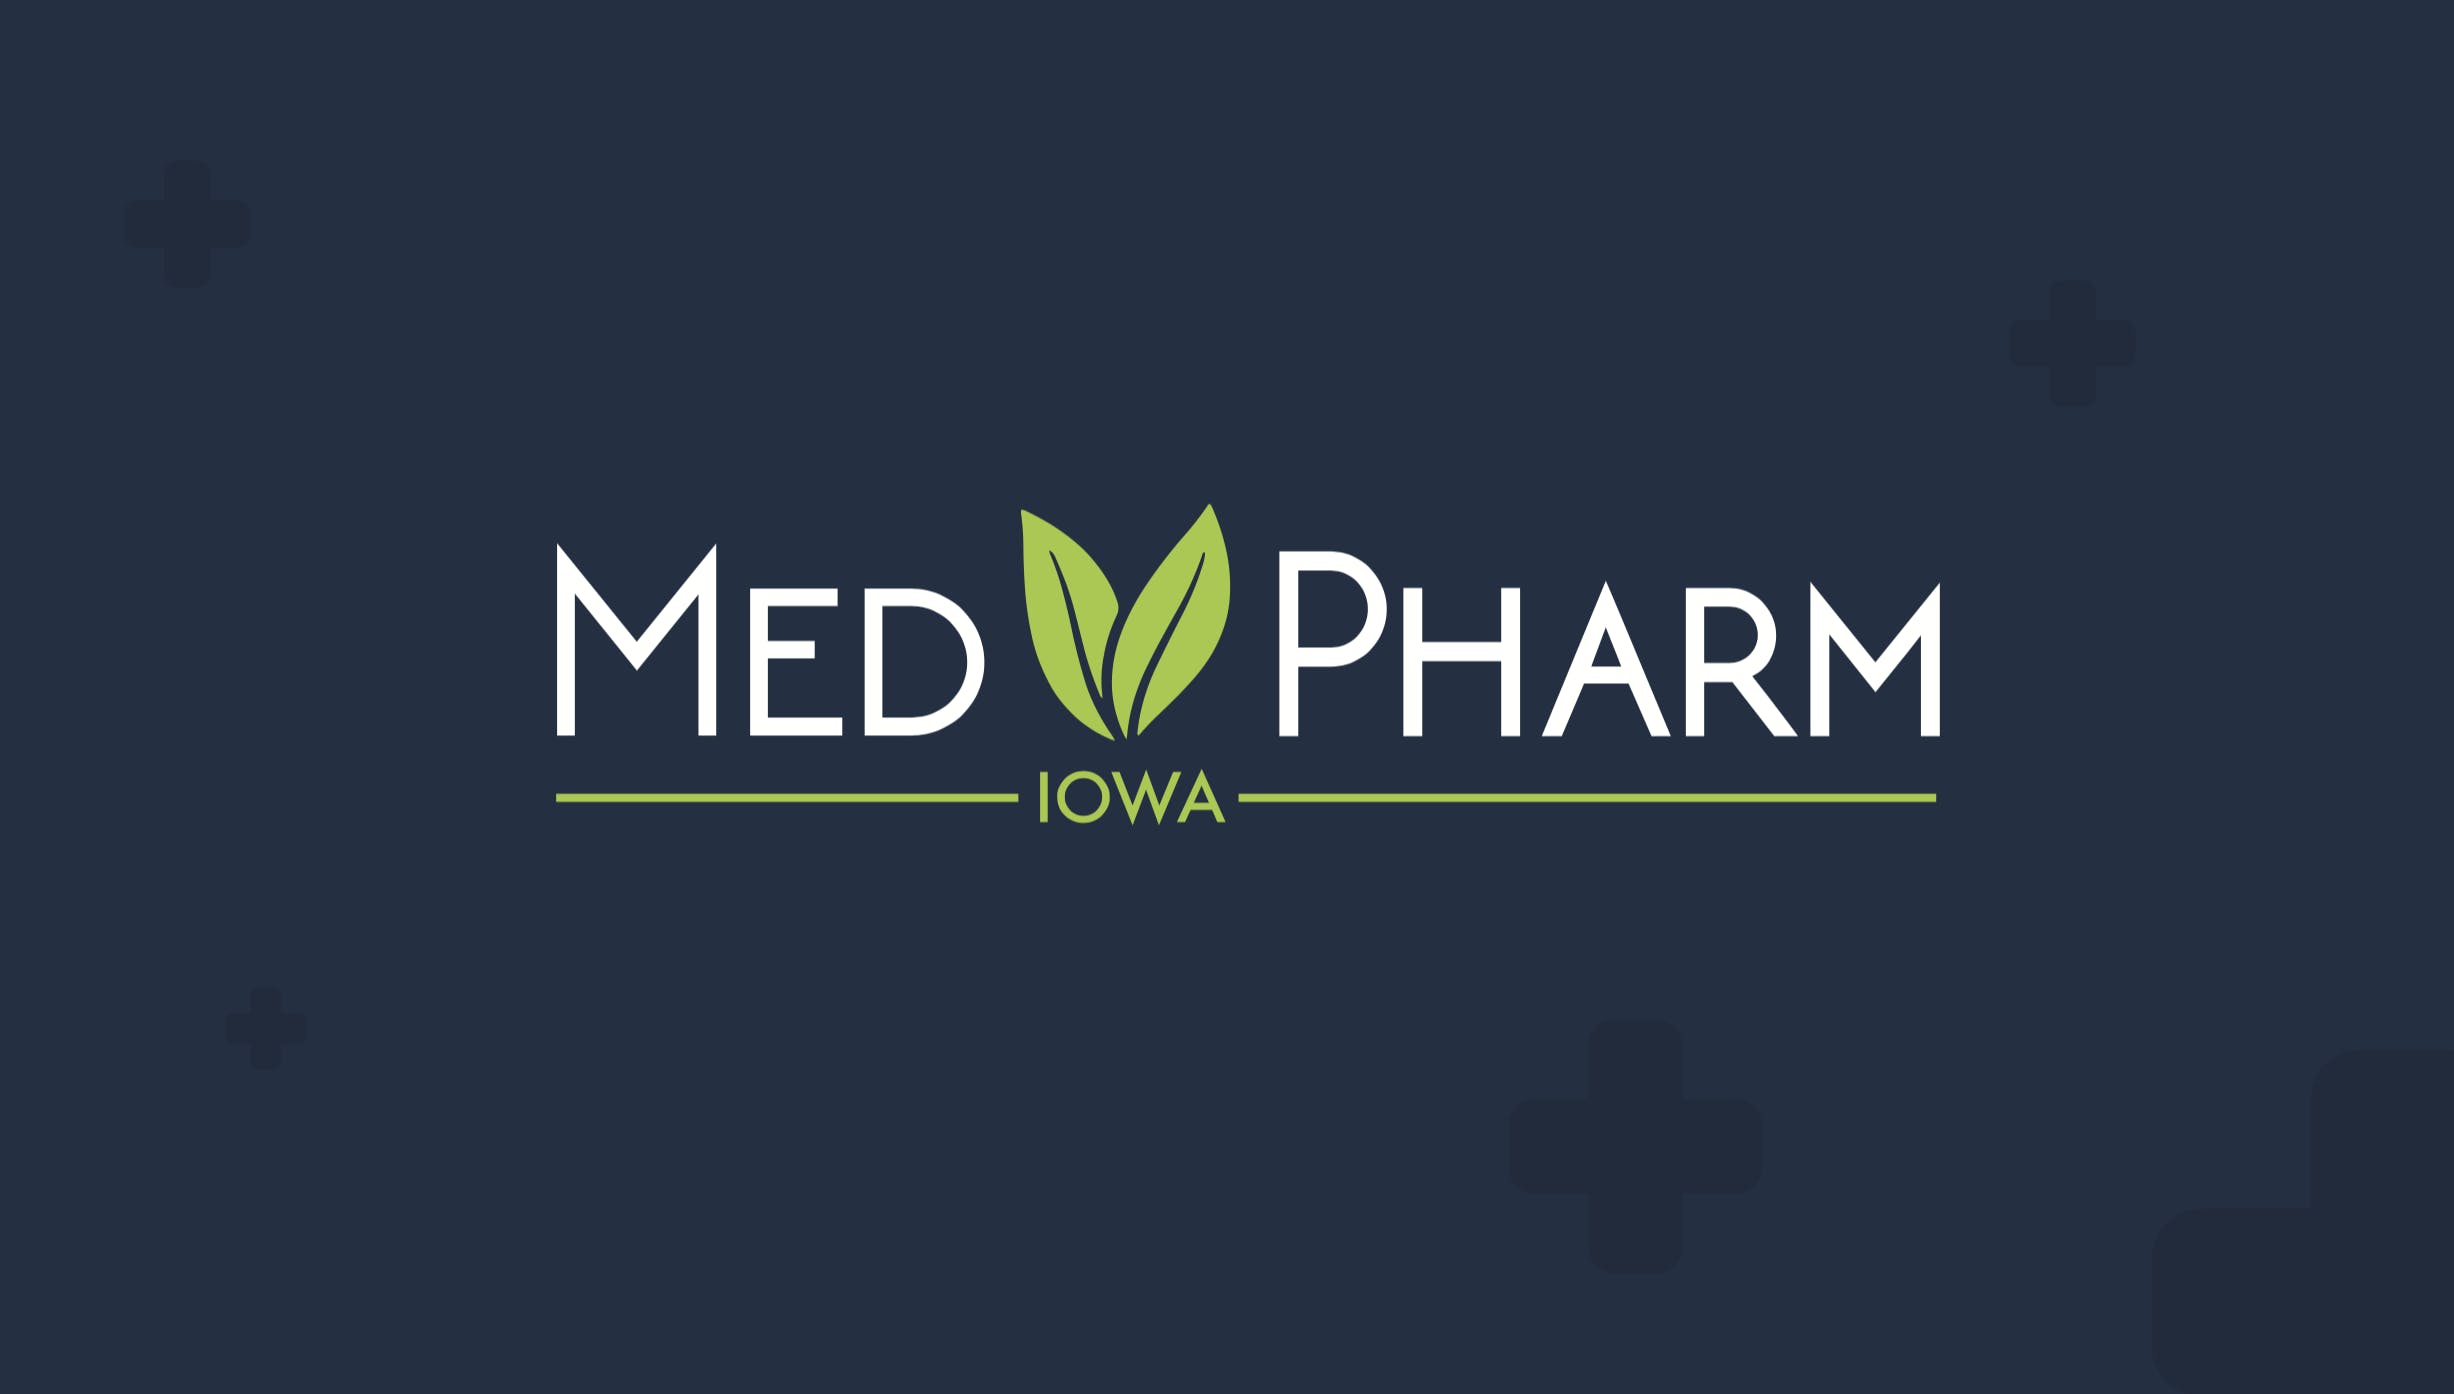 MedPharm Iowa - Sioux City (Grand Opening 12/1) - Medical Marijuana Doctors - Cannabizme.com